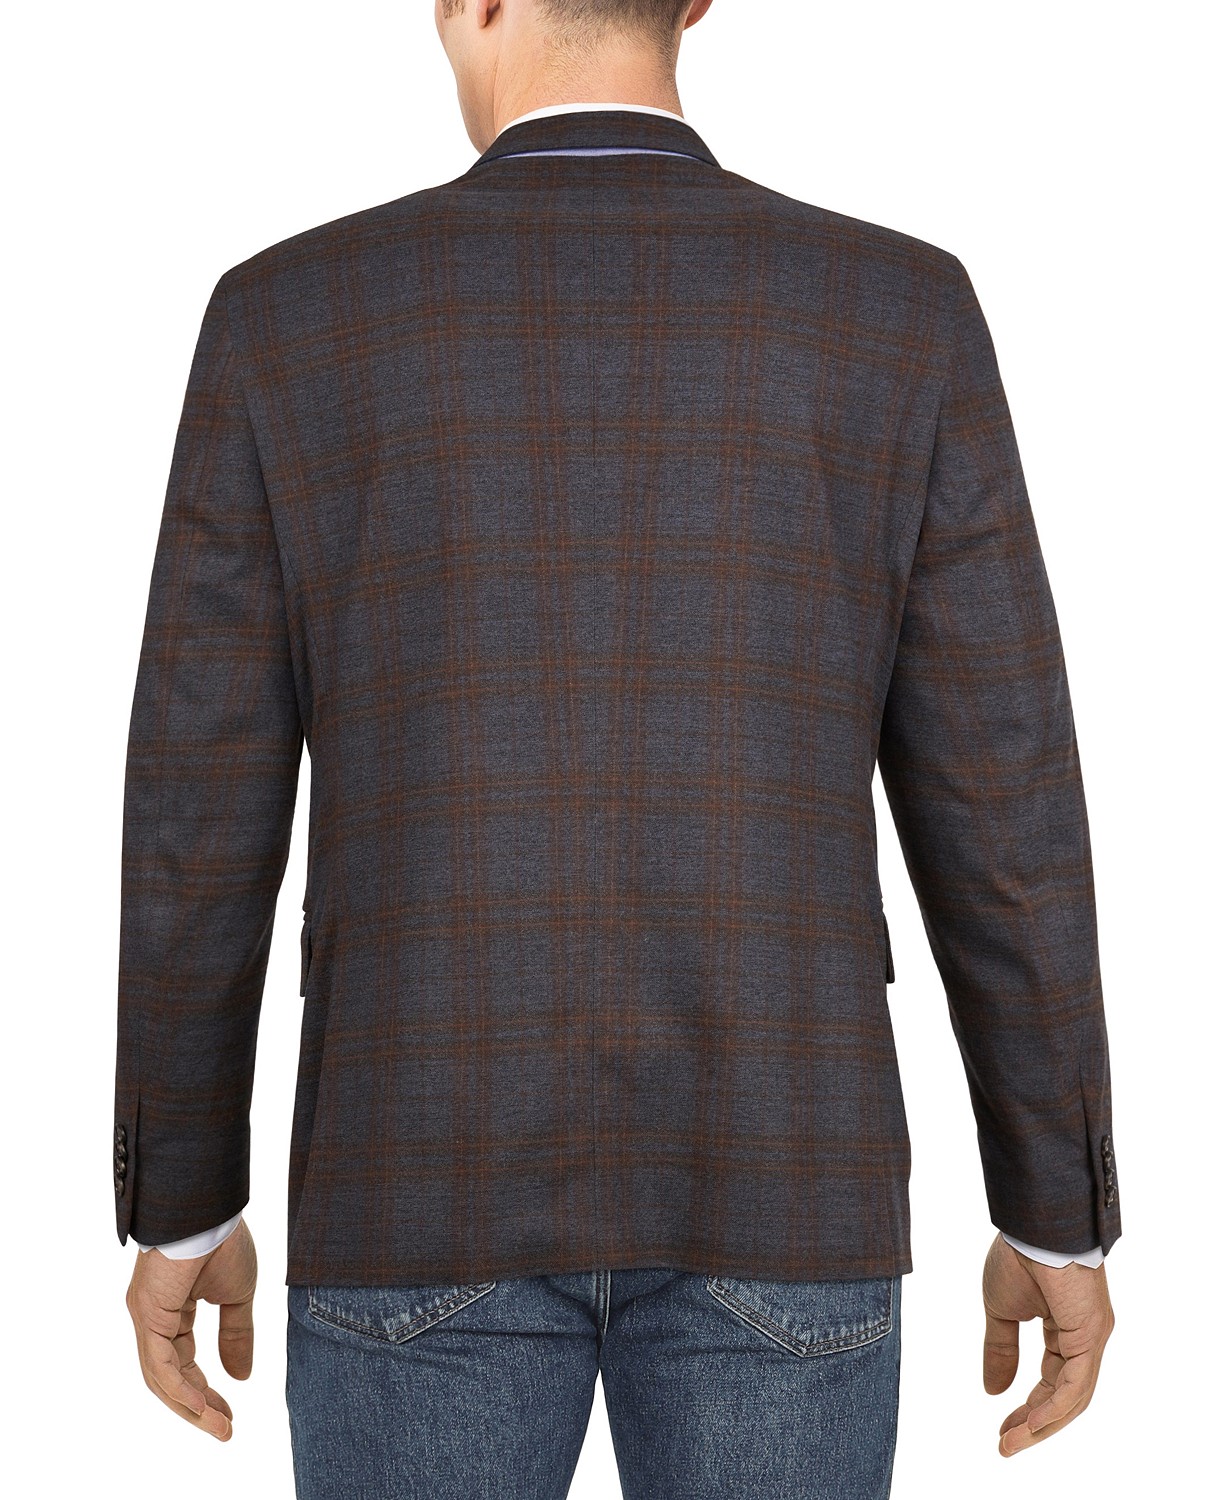 www.couturepoint.com-tommy-hilfiger-mens-grey-brown-modern-fit-patterned-blazer